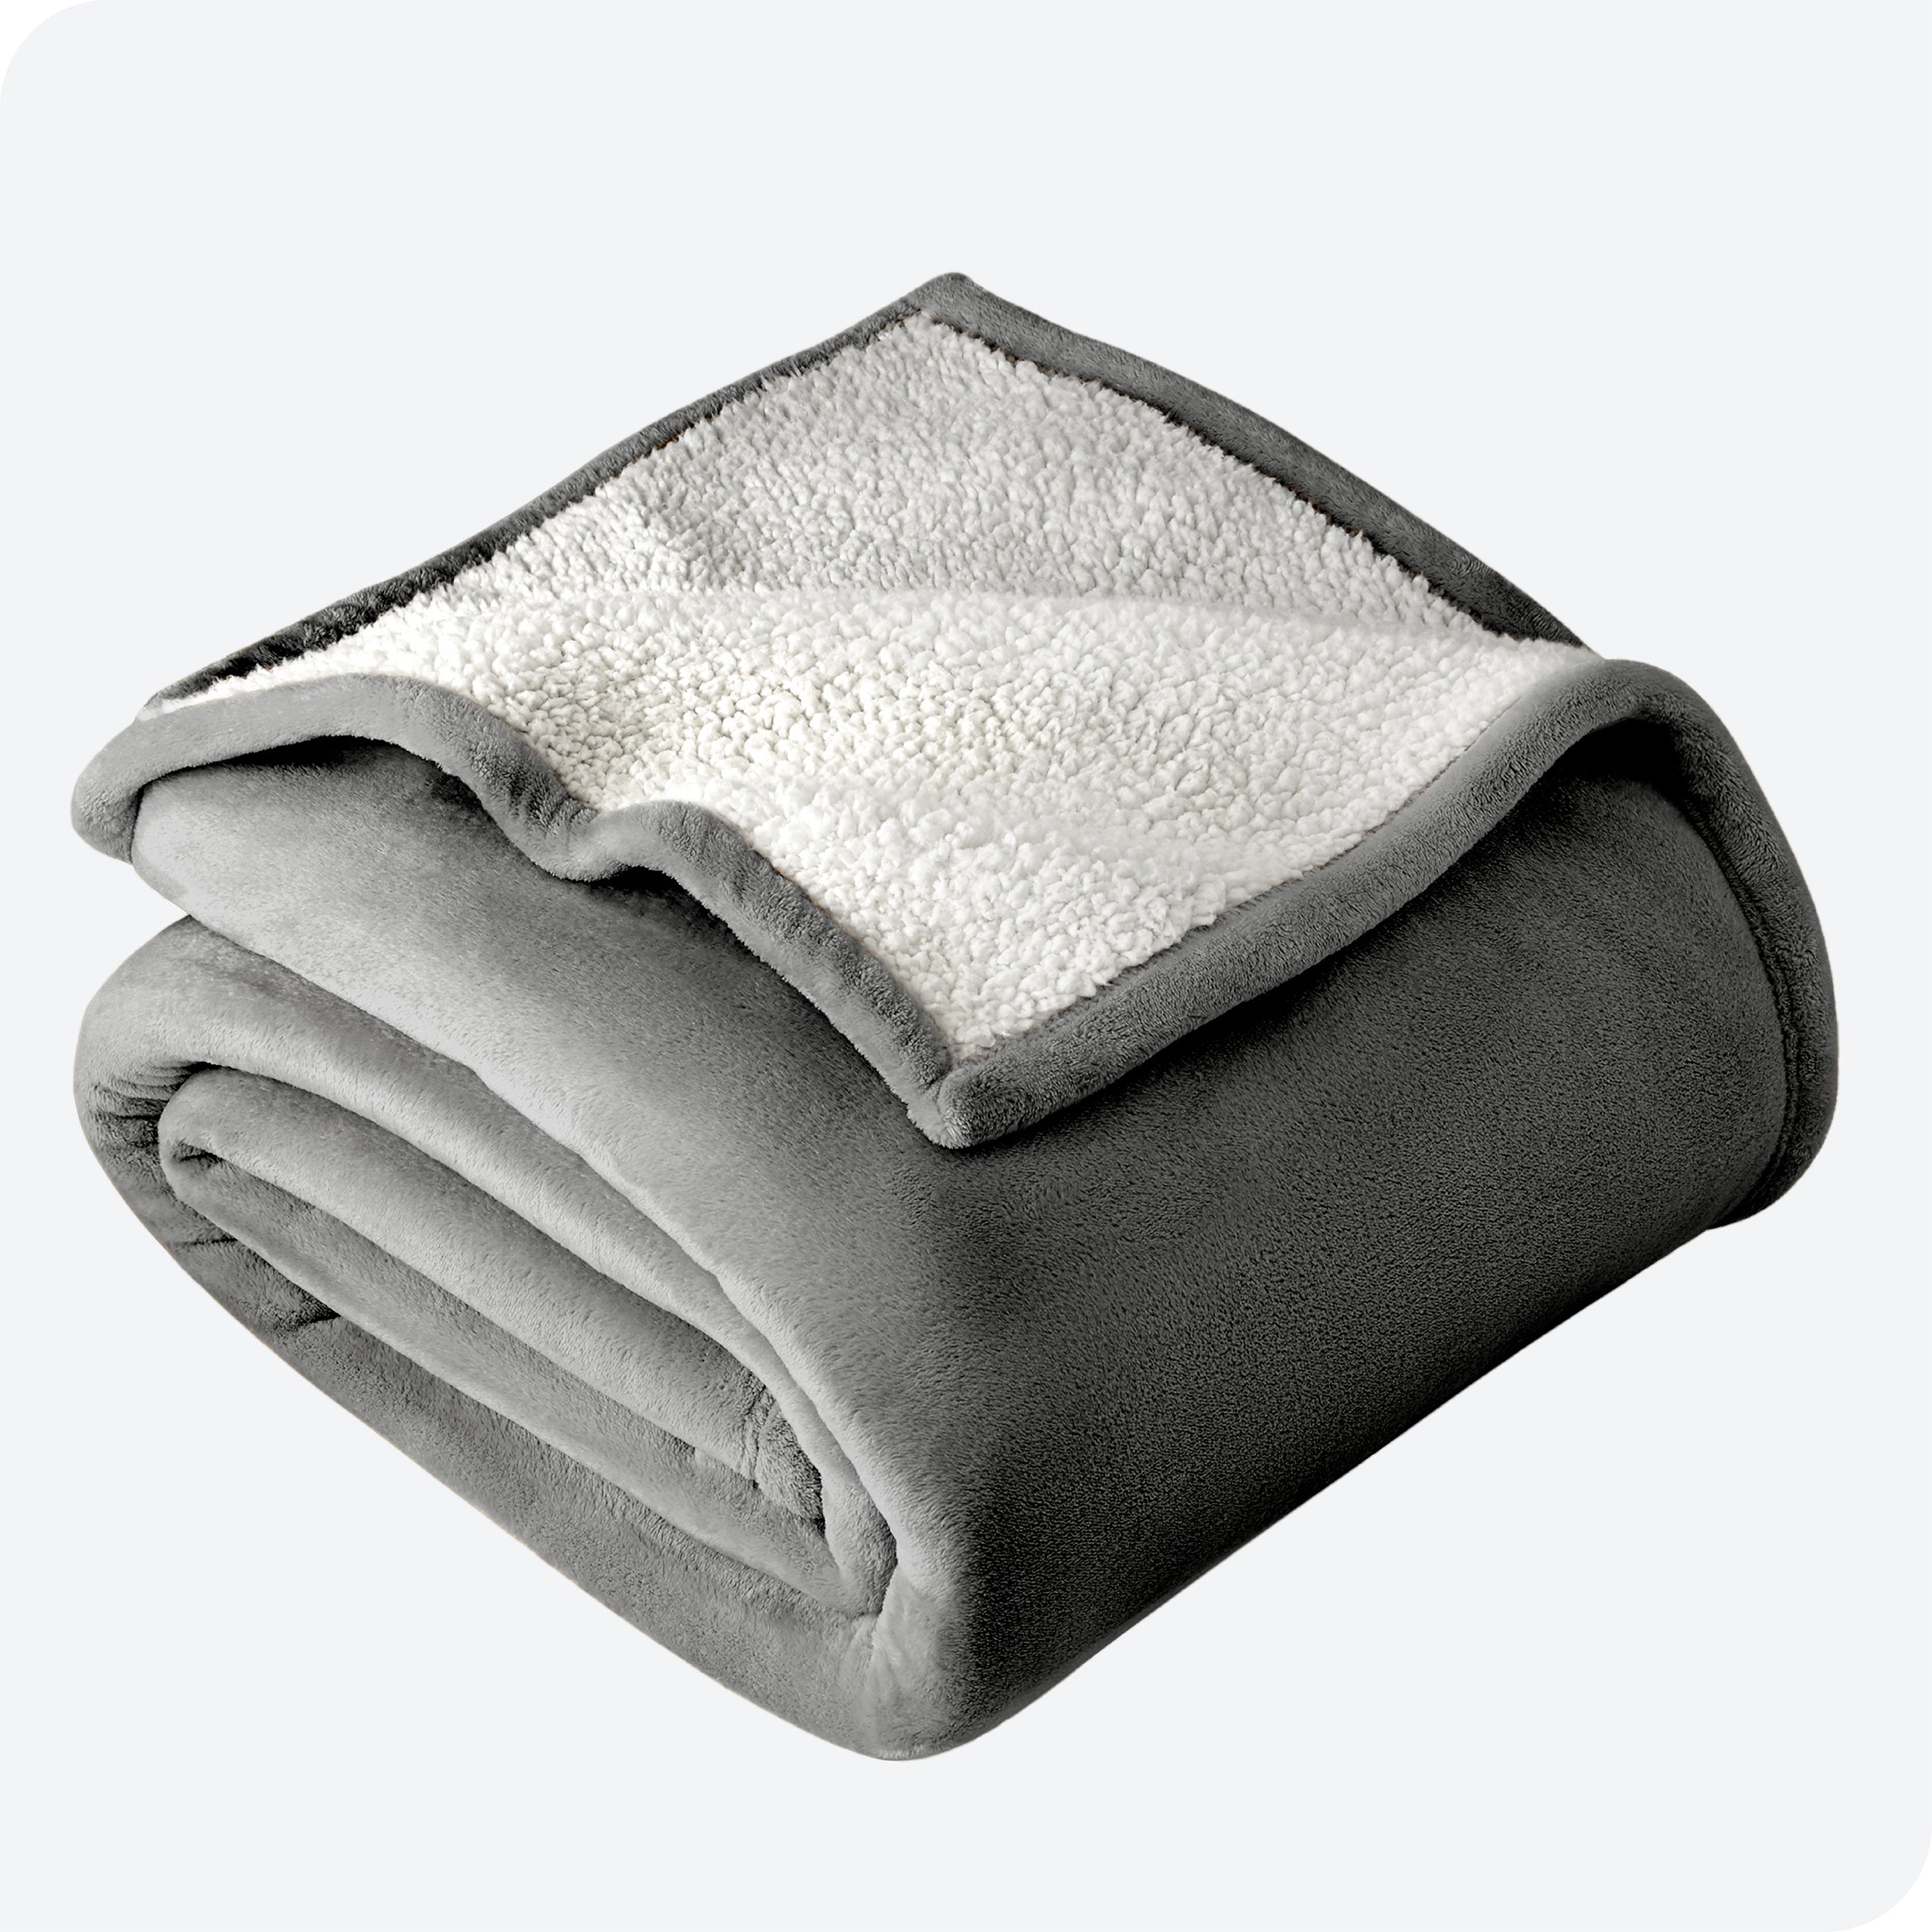 Grey Sherpa Blanket folded